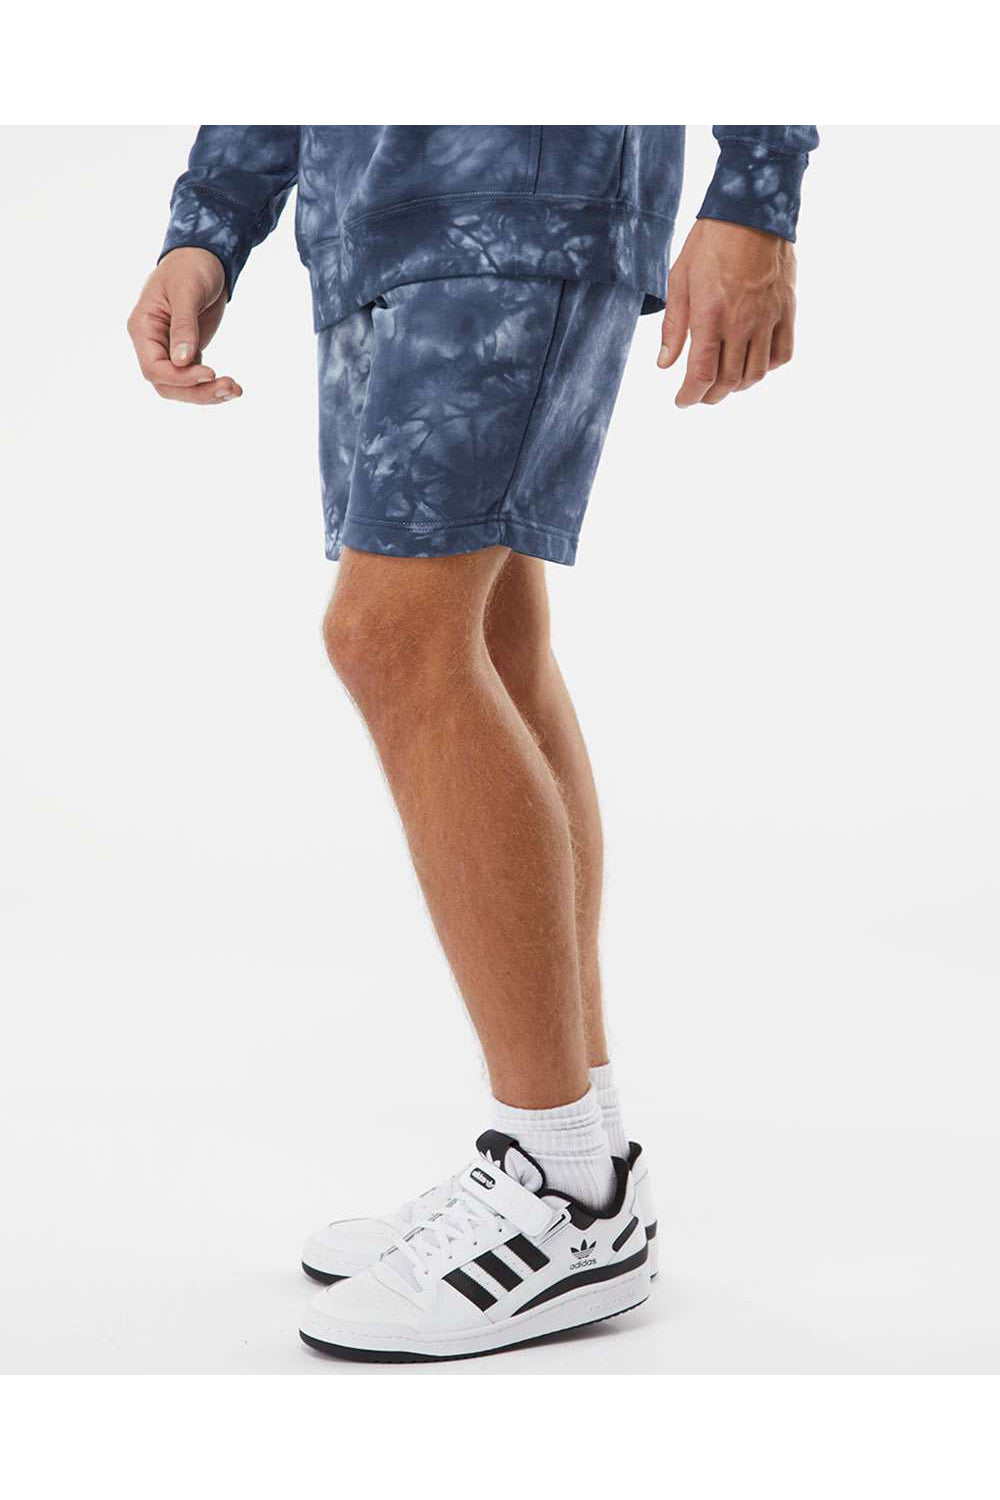 Independent Trading Co. PRM50STTD Mens Tie-Dye Fleece Shorts w/ Pockets Navy Blue Model Side